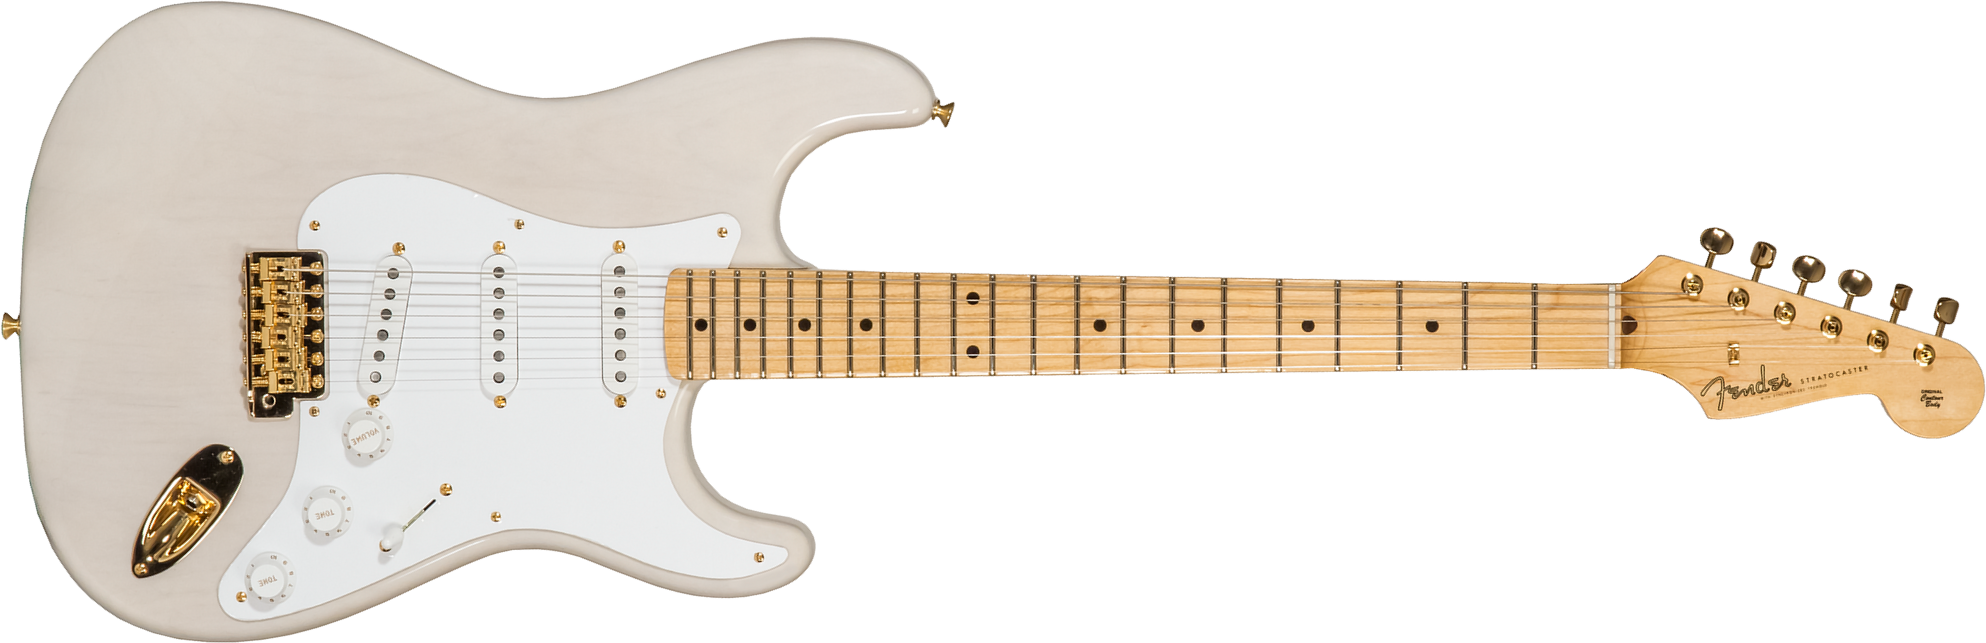 Fender Custom Shop Strat 1957 3s Trem Mn #r125475 - Nos White Blonde - Str shape electric guitar - Main picture